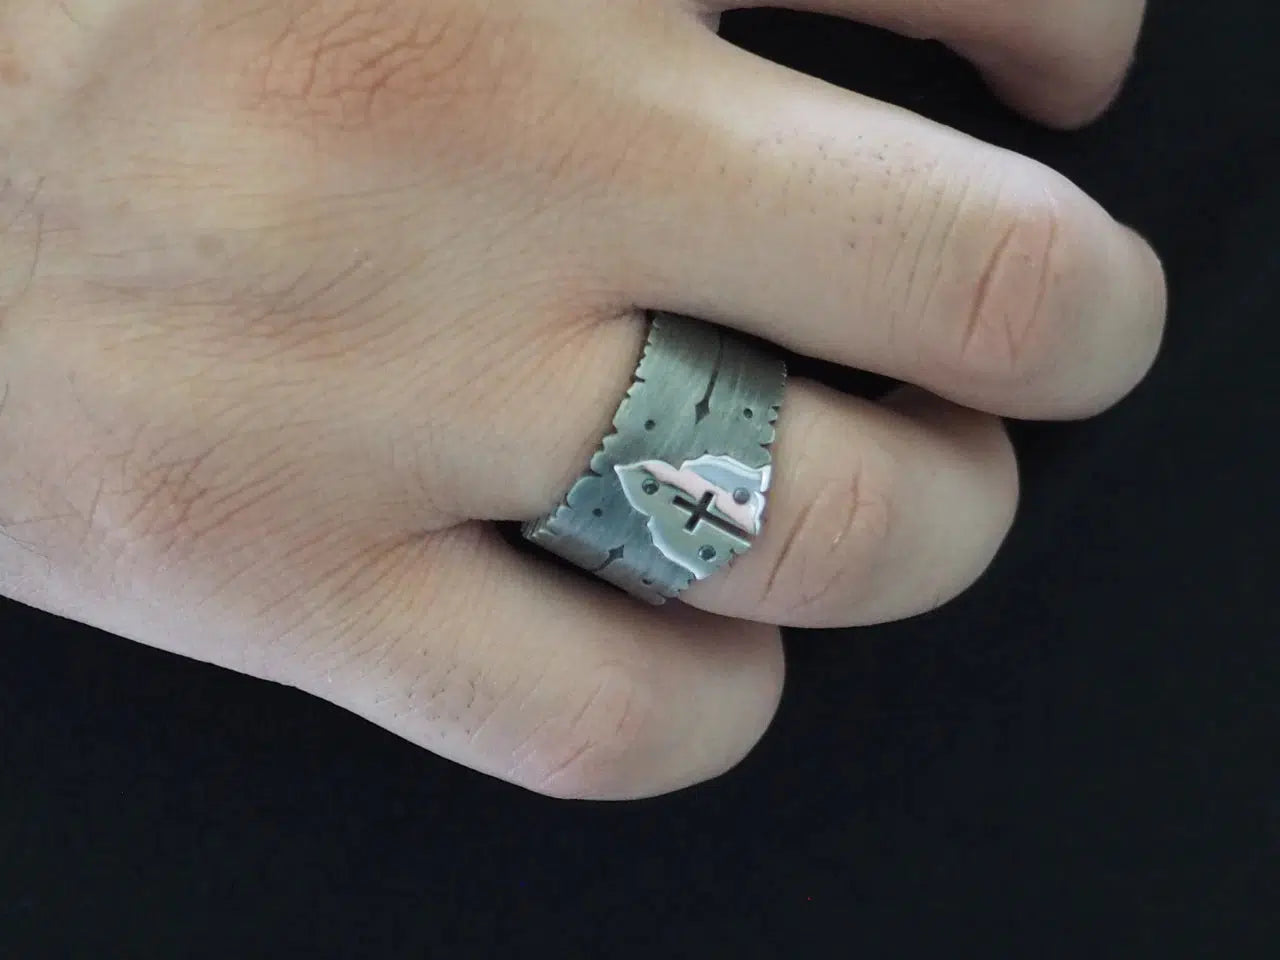 Sacred Heart Ring / Black Diamonds - Oxidized Silver